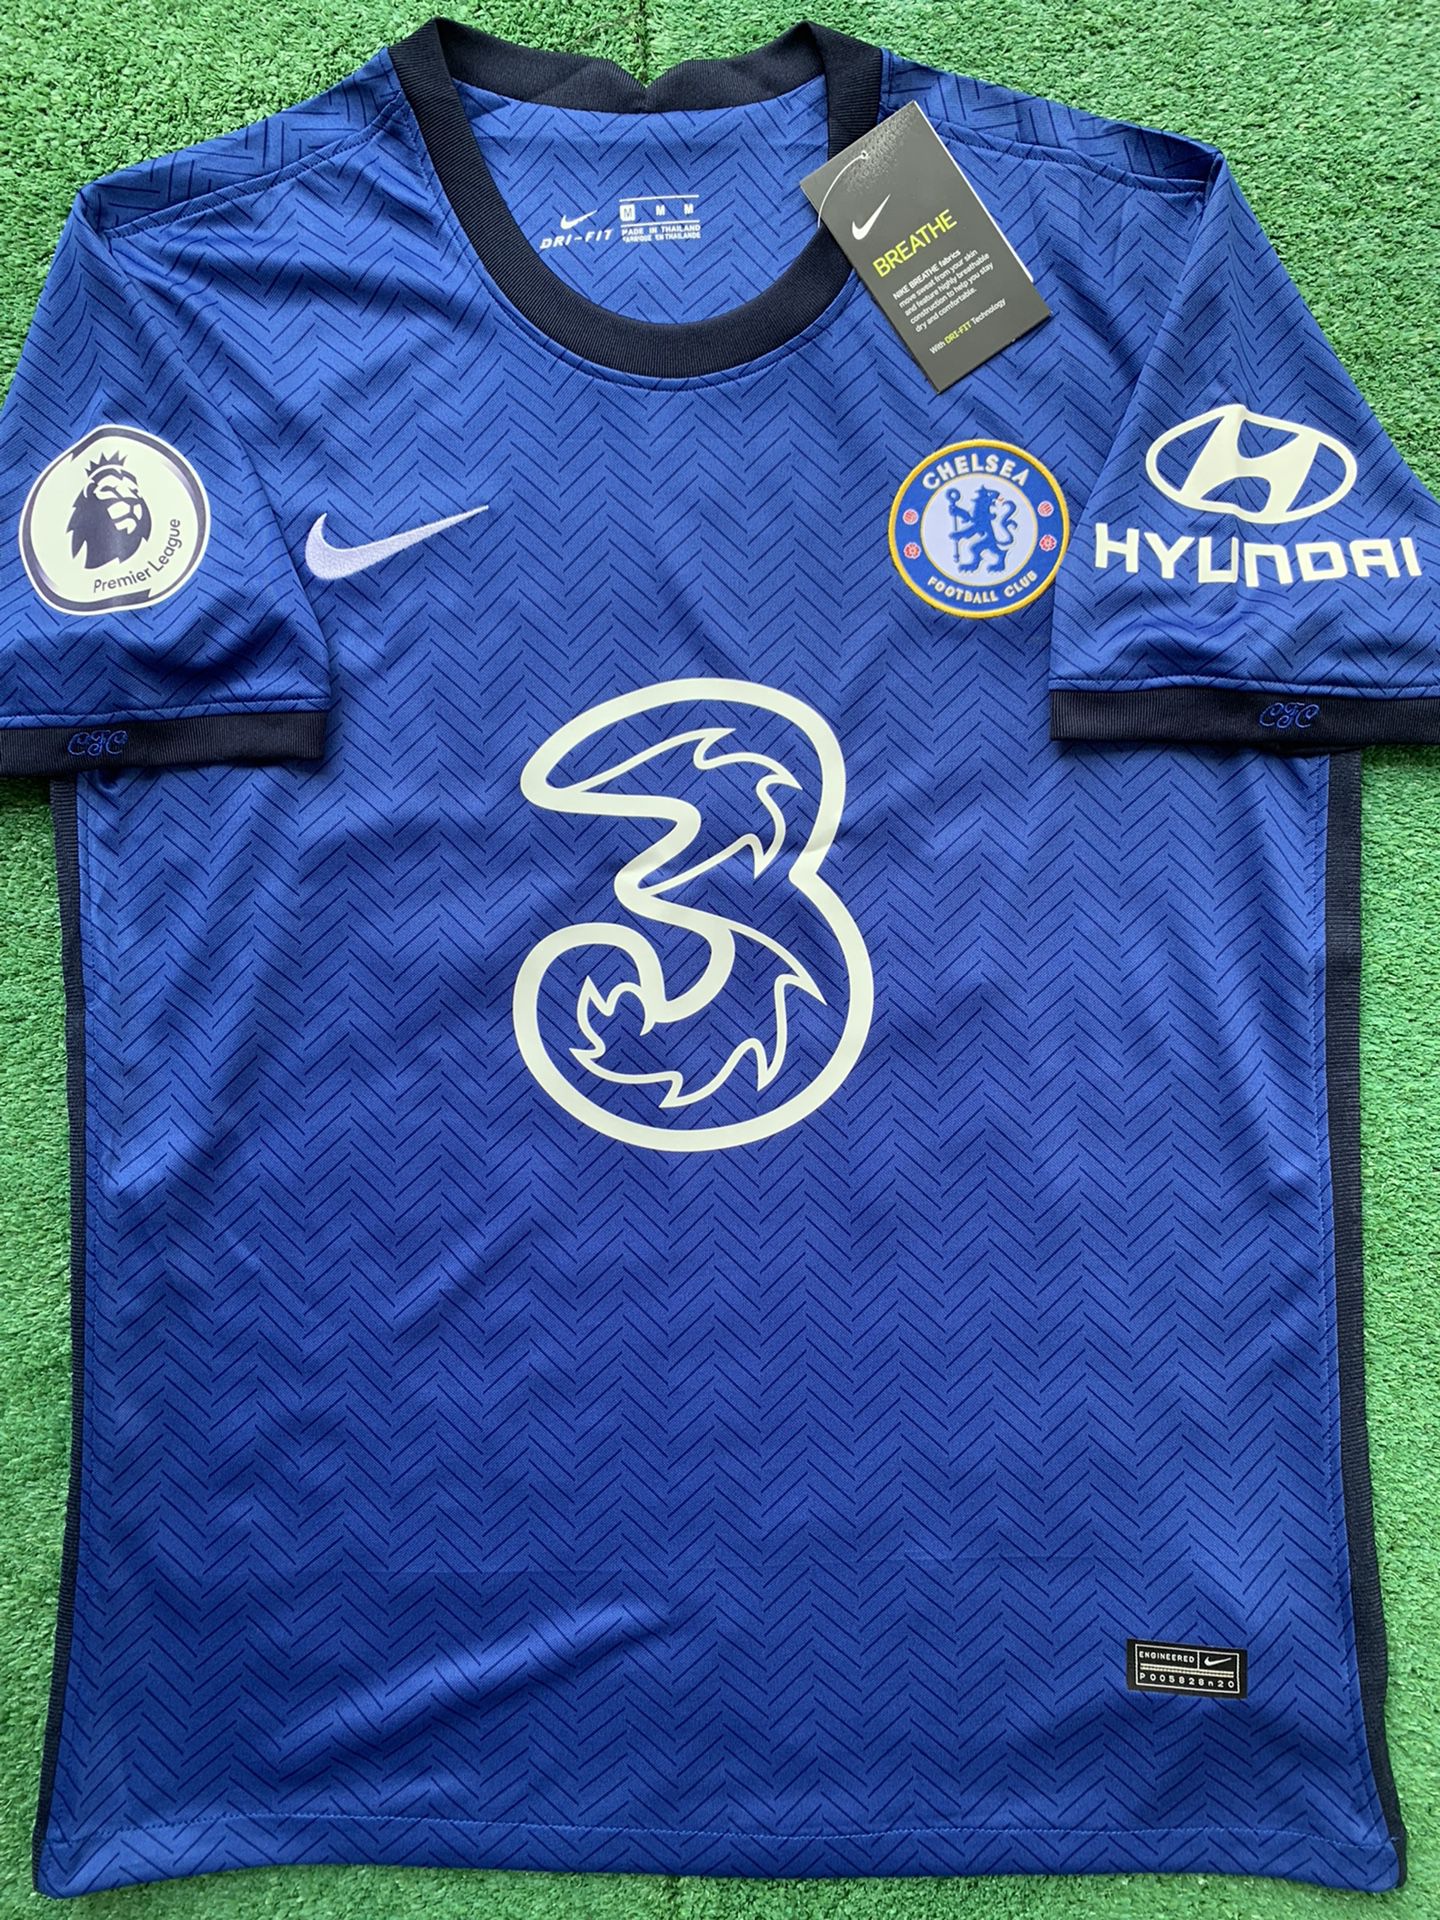 2020/21 Chelsea FC soccer jersey Havertz